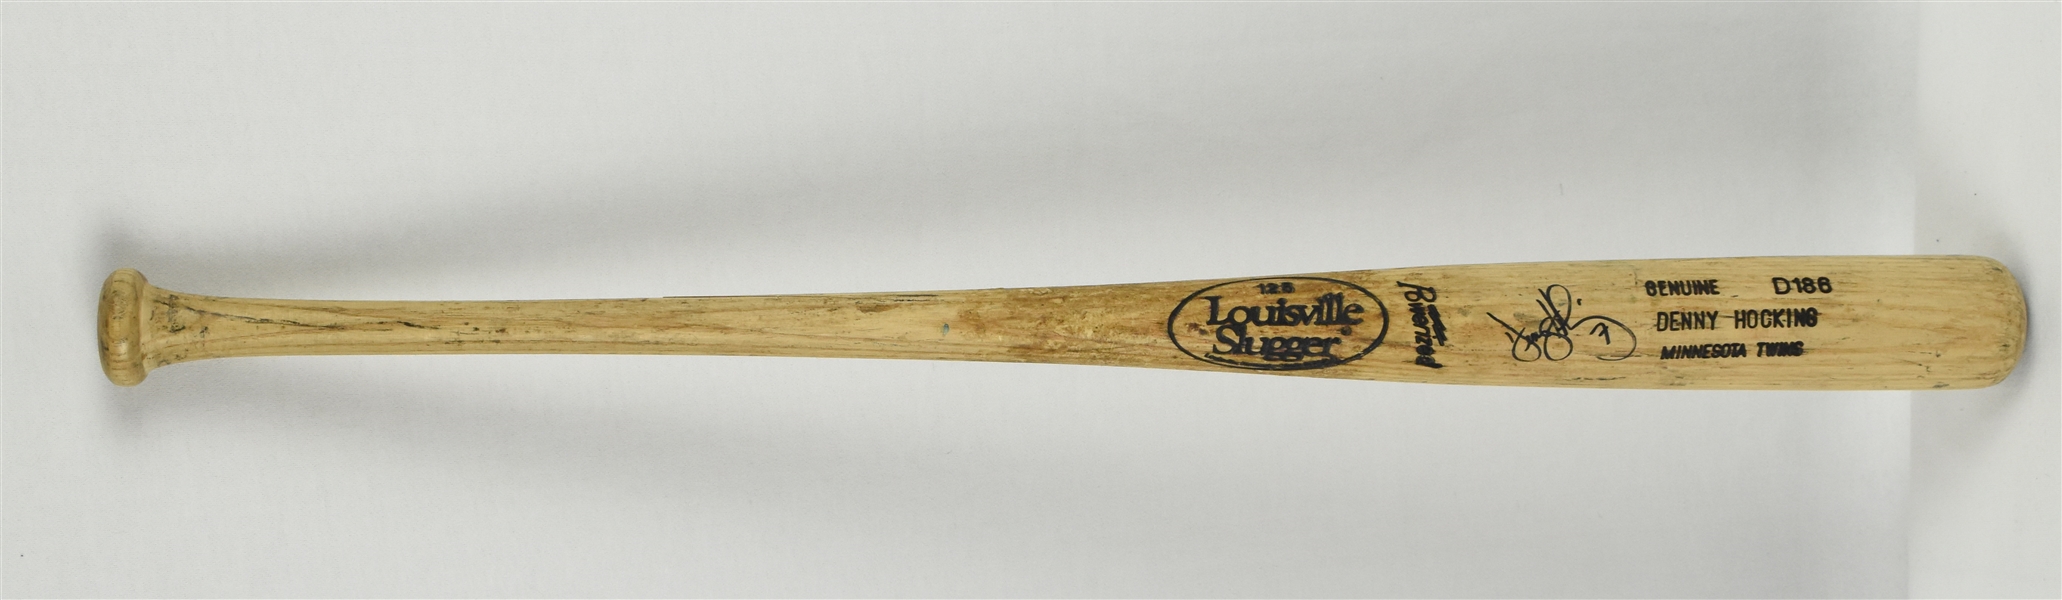 Denny Hocking Game Used & Autographed Minnesota Twins Bat